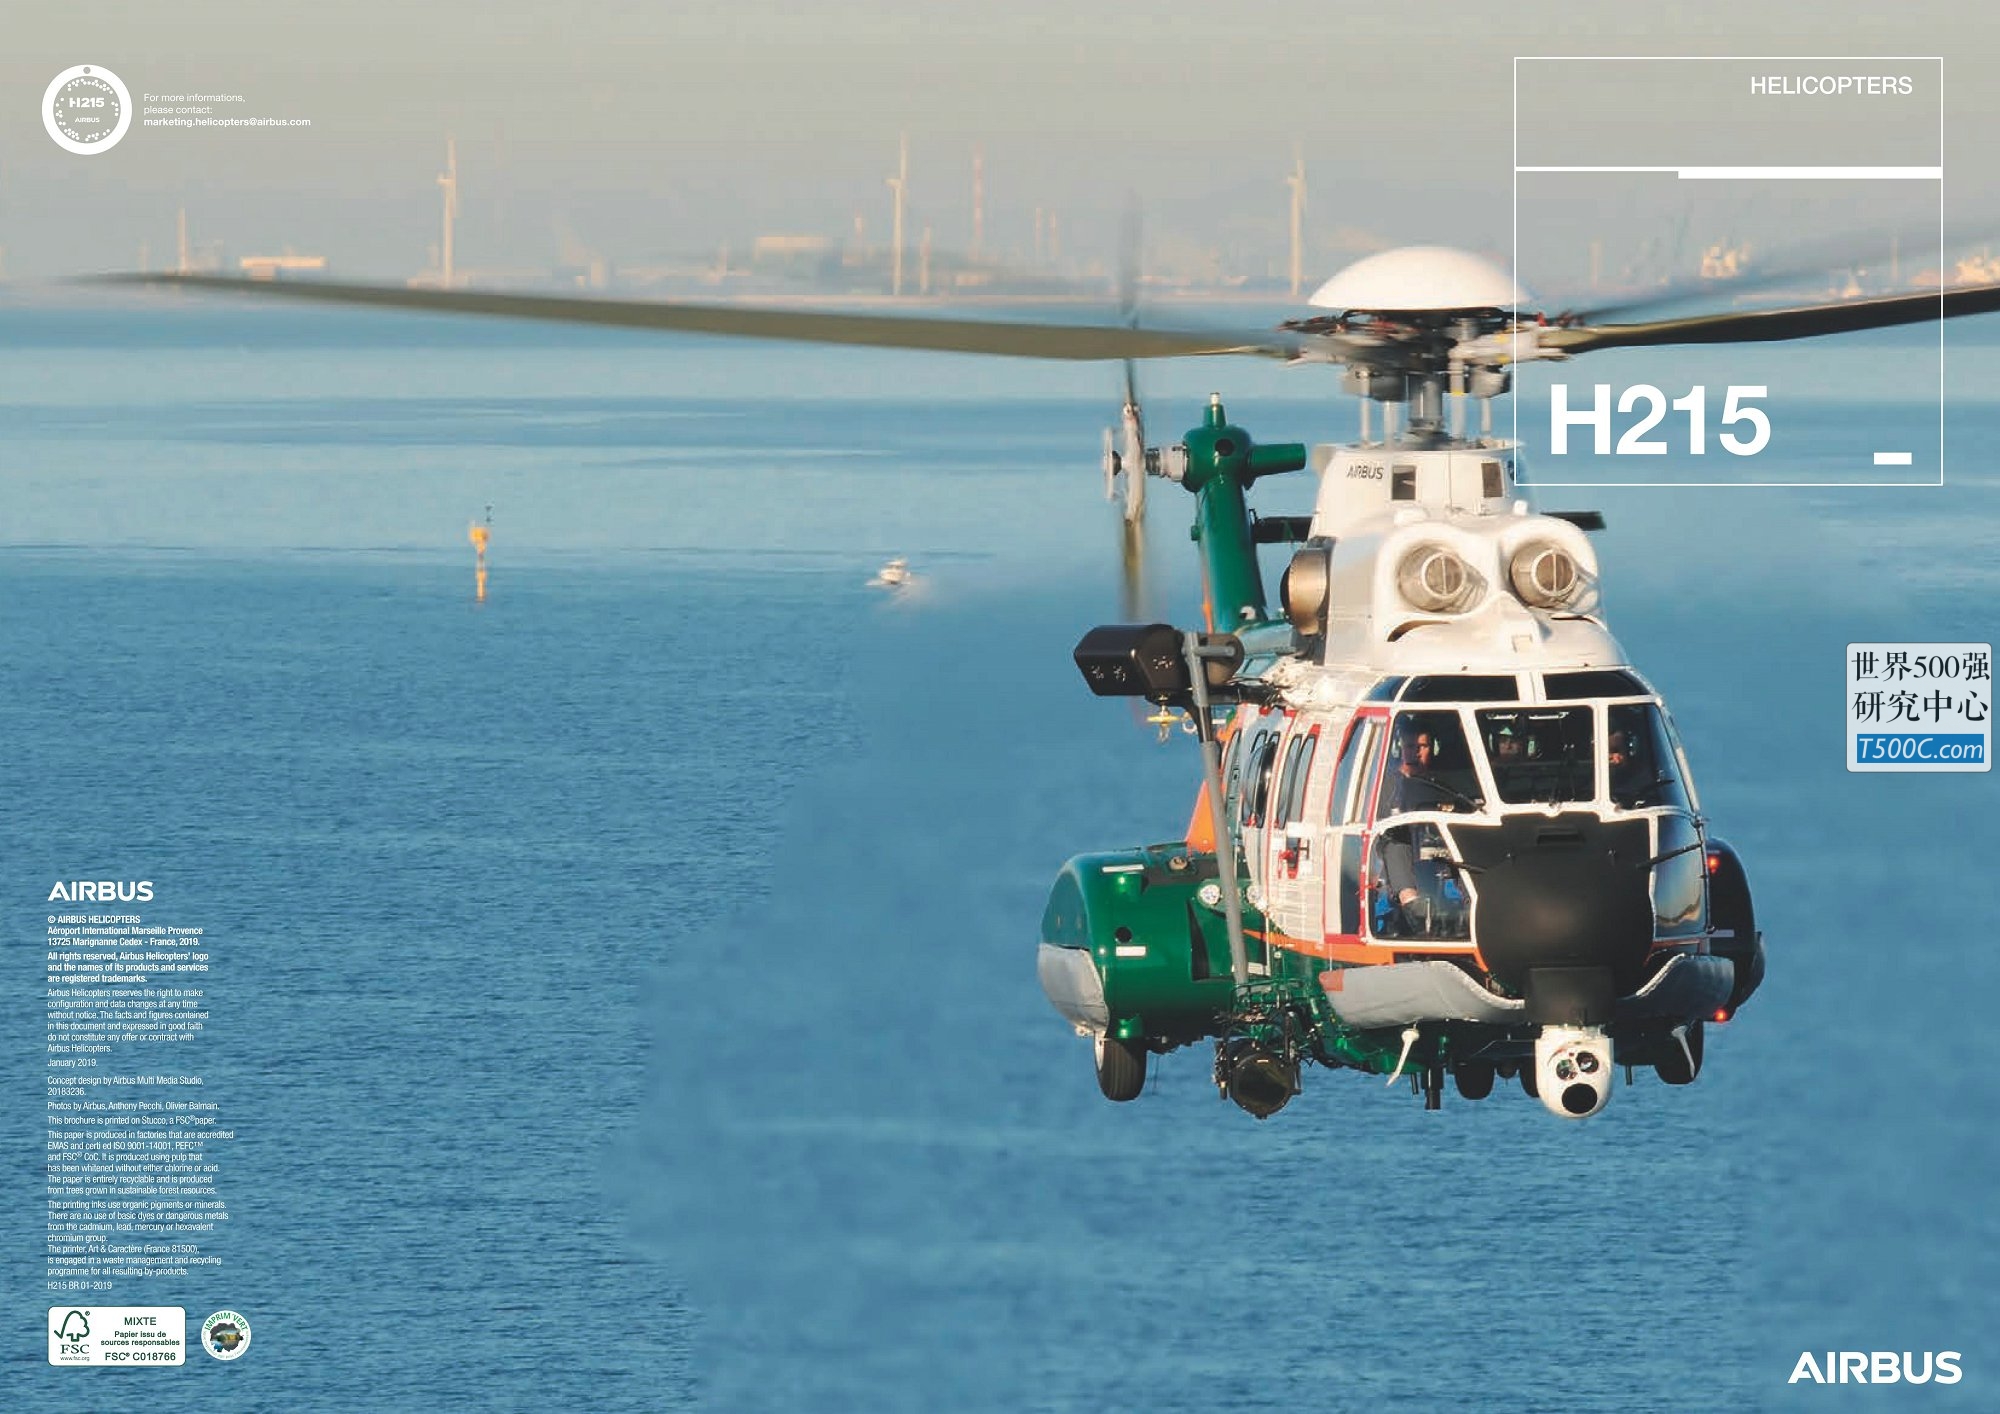 空客直升机AirbusHelicopter_产品宣传册Brochure_T500C.com_H215 2019.pdf